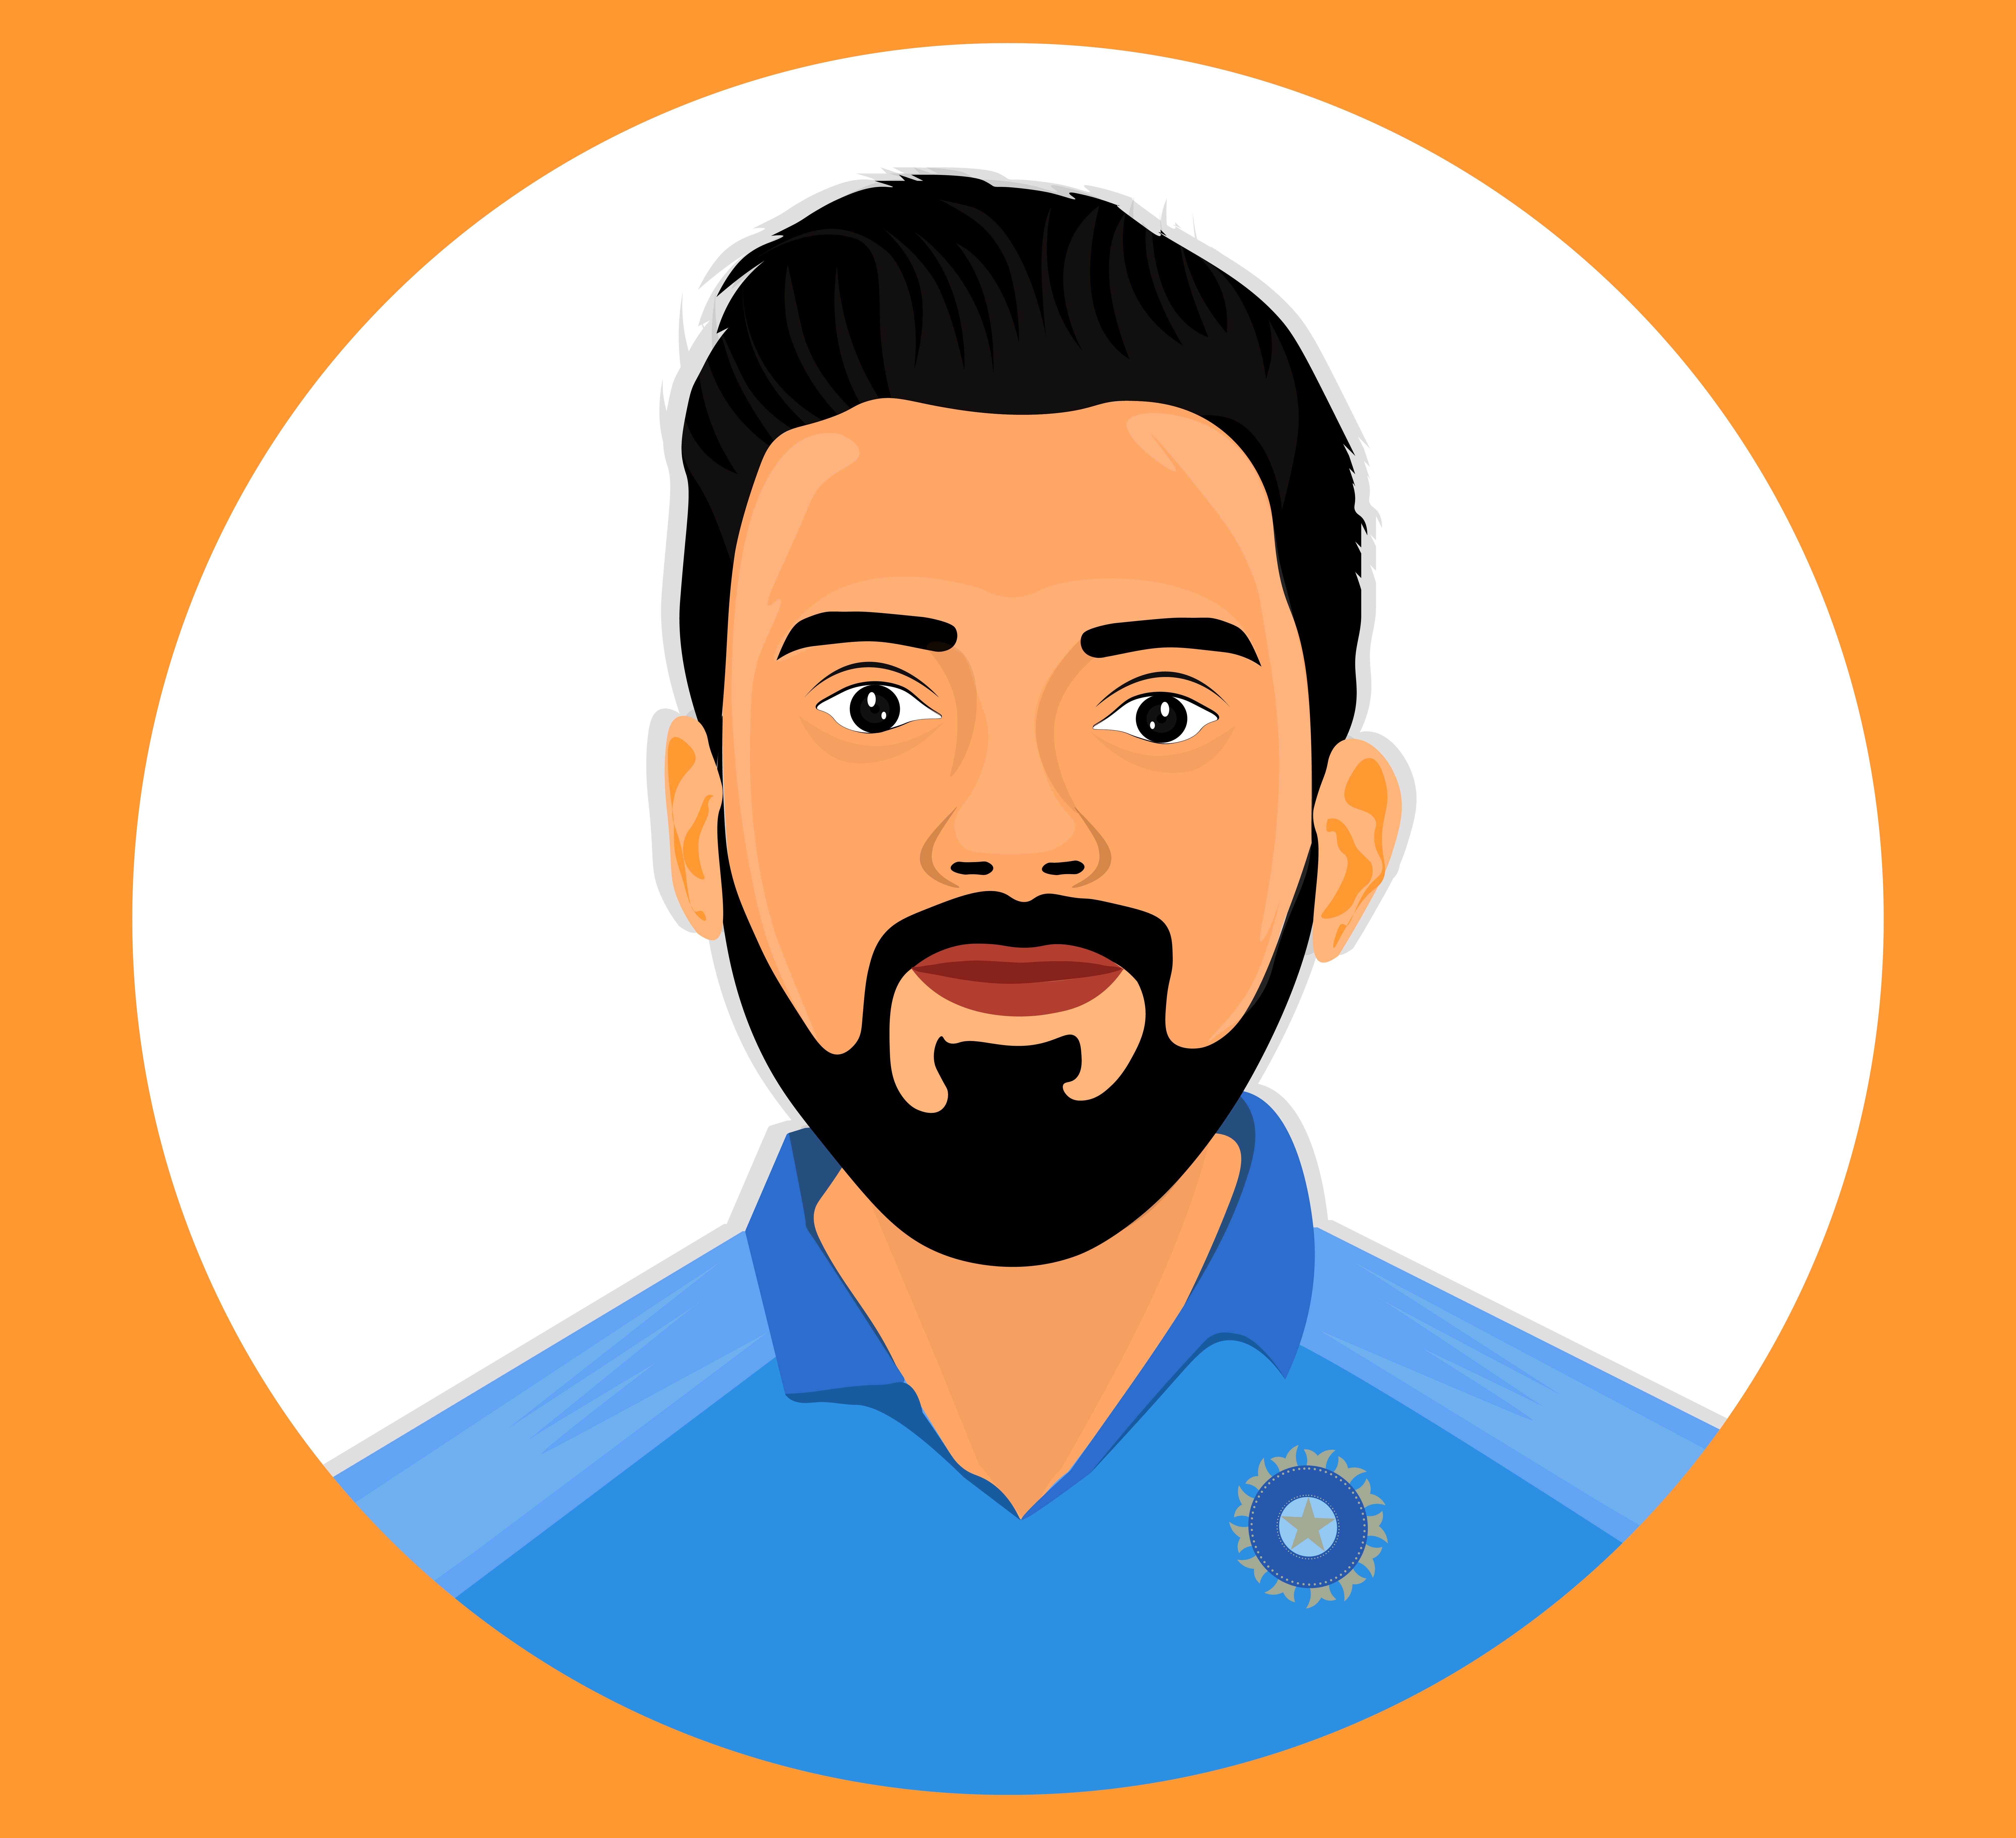 Kl Rahul, india cricket team player, vector illustration.